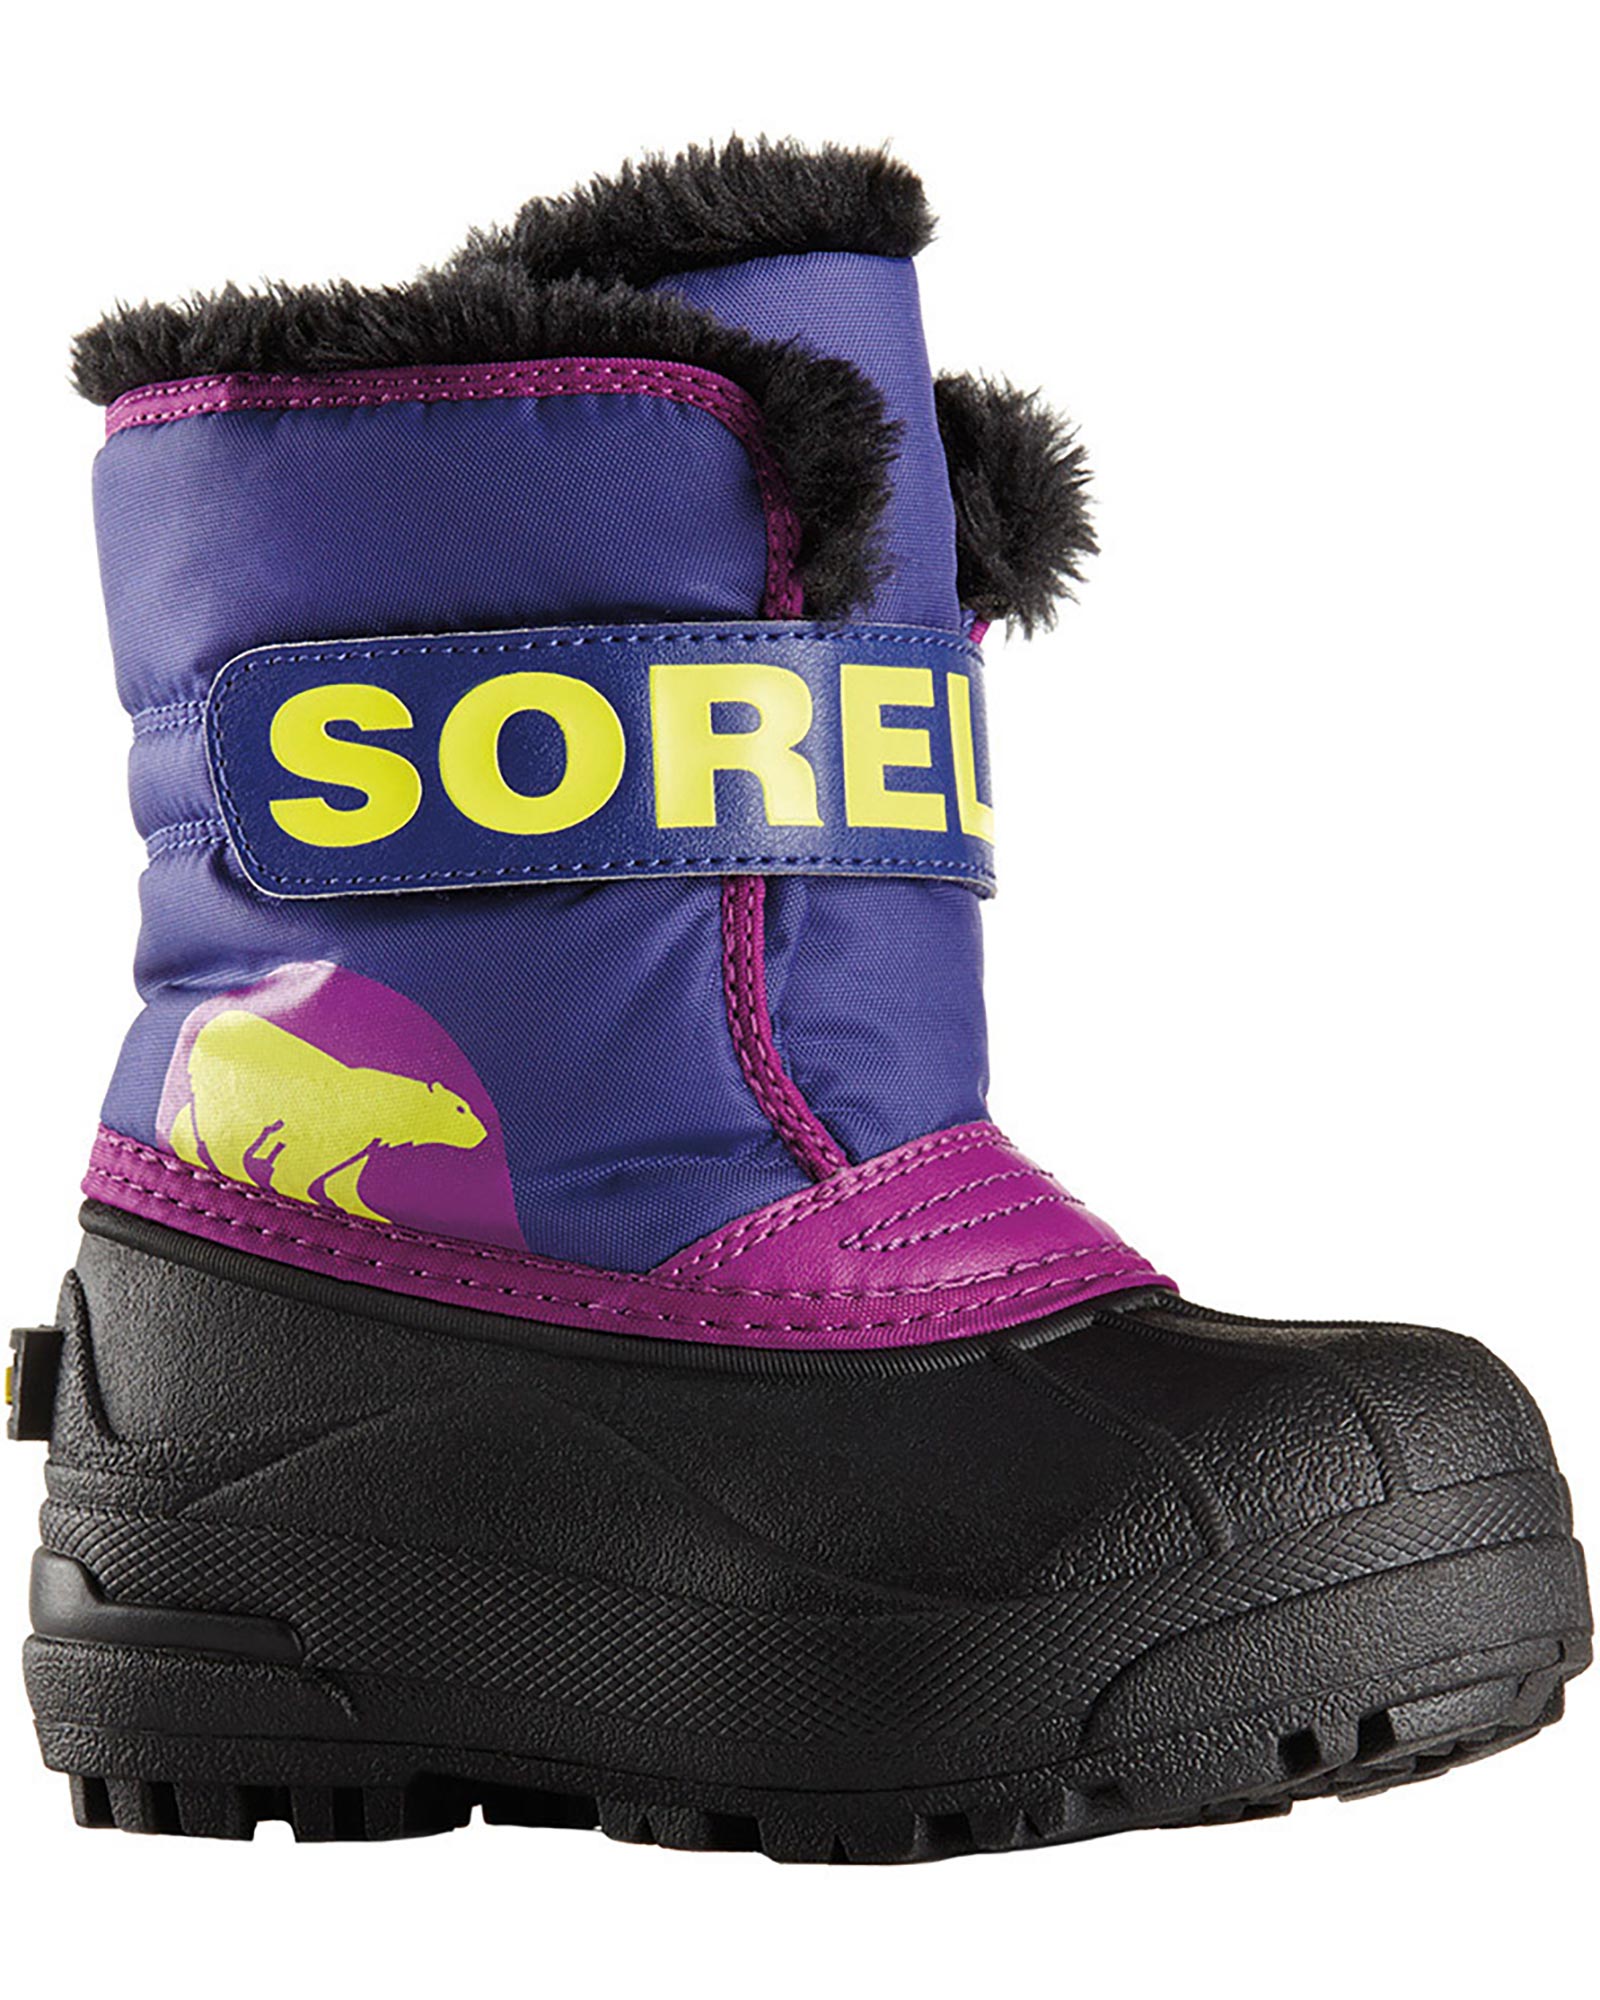 Sorel Snow Commander Toddler Snow Boots - Grape Juice/Bright Plum UK 4 INF